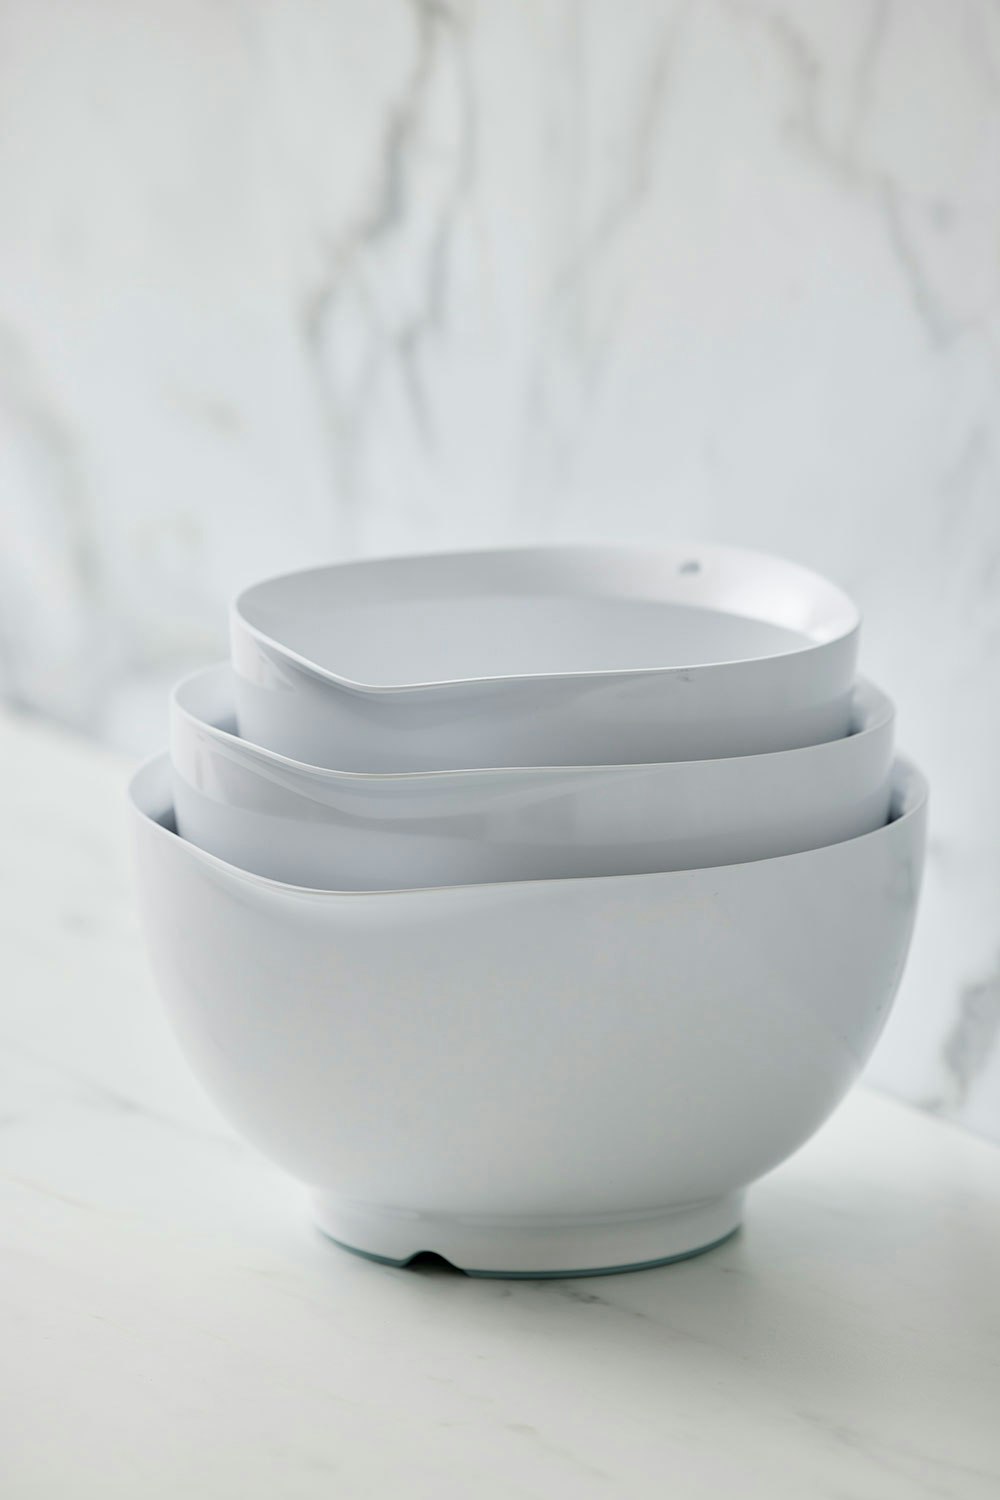 https://royaldesign.com/image/2/rosti-bowl-victoria-2-3-liters-white-2